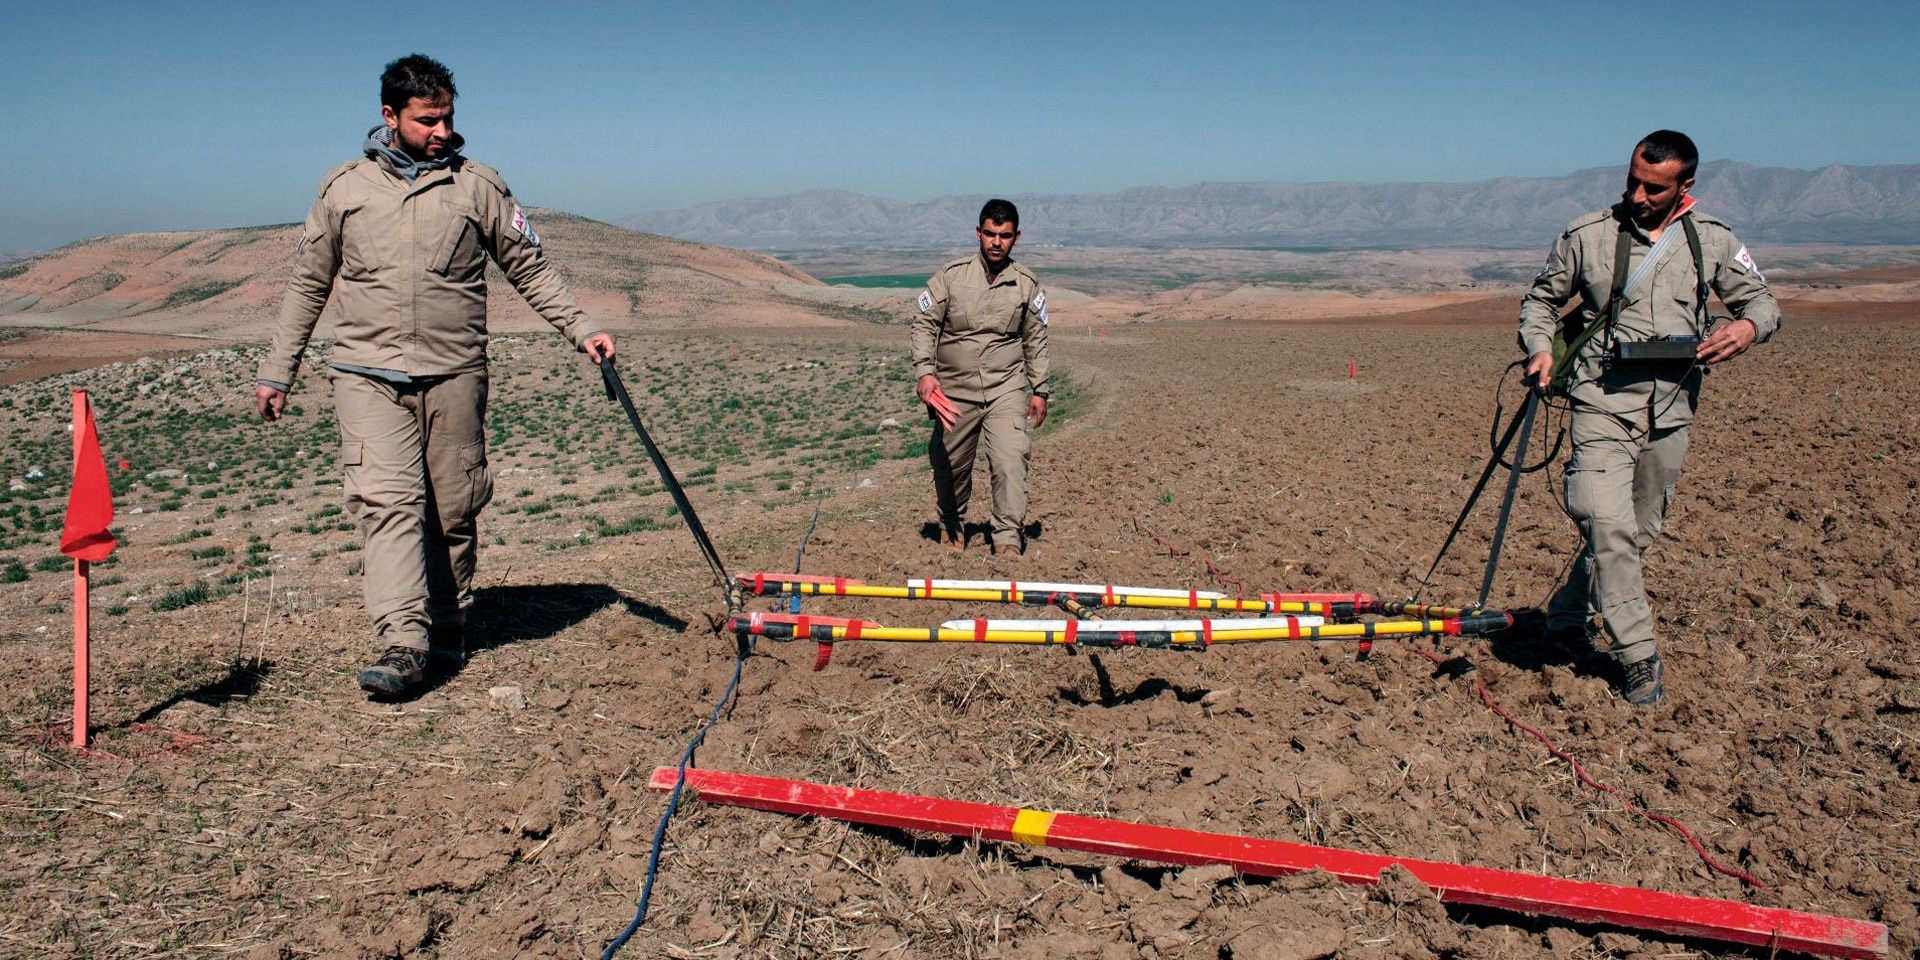  Three men in overalls clear a field in the Iraqi desert.